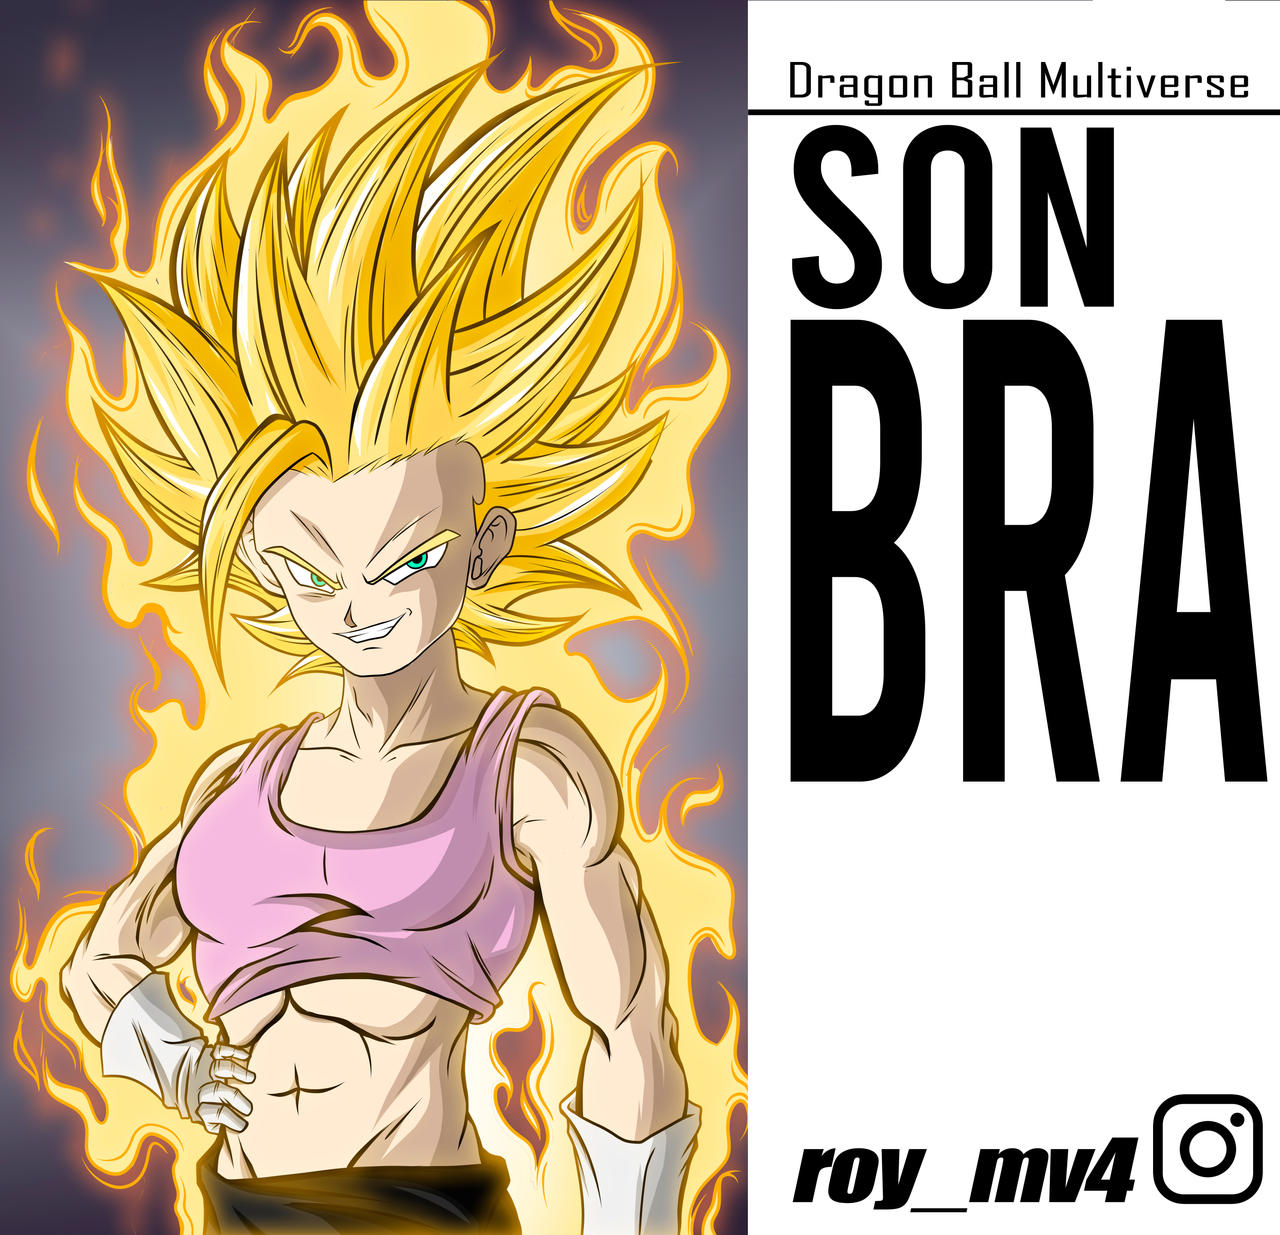 Dragon ball super multiverse /// Son Bra x Saiyan reader - Bio